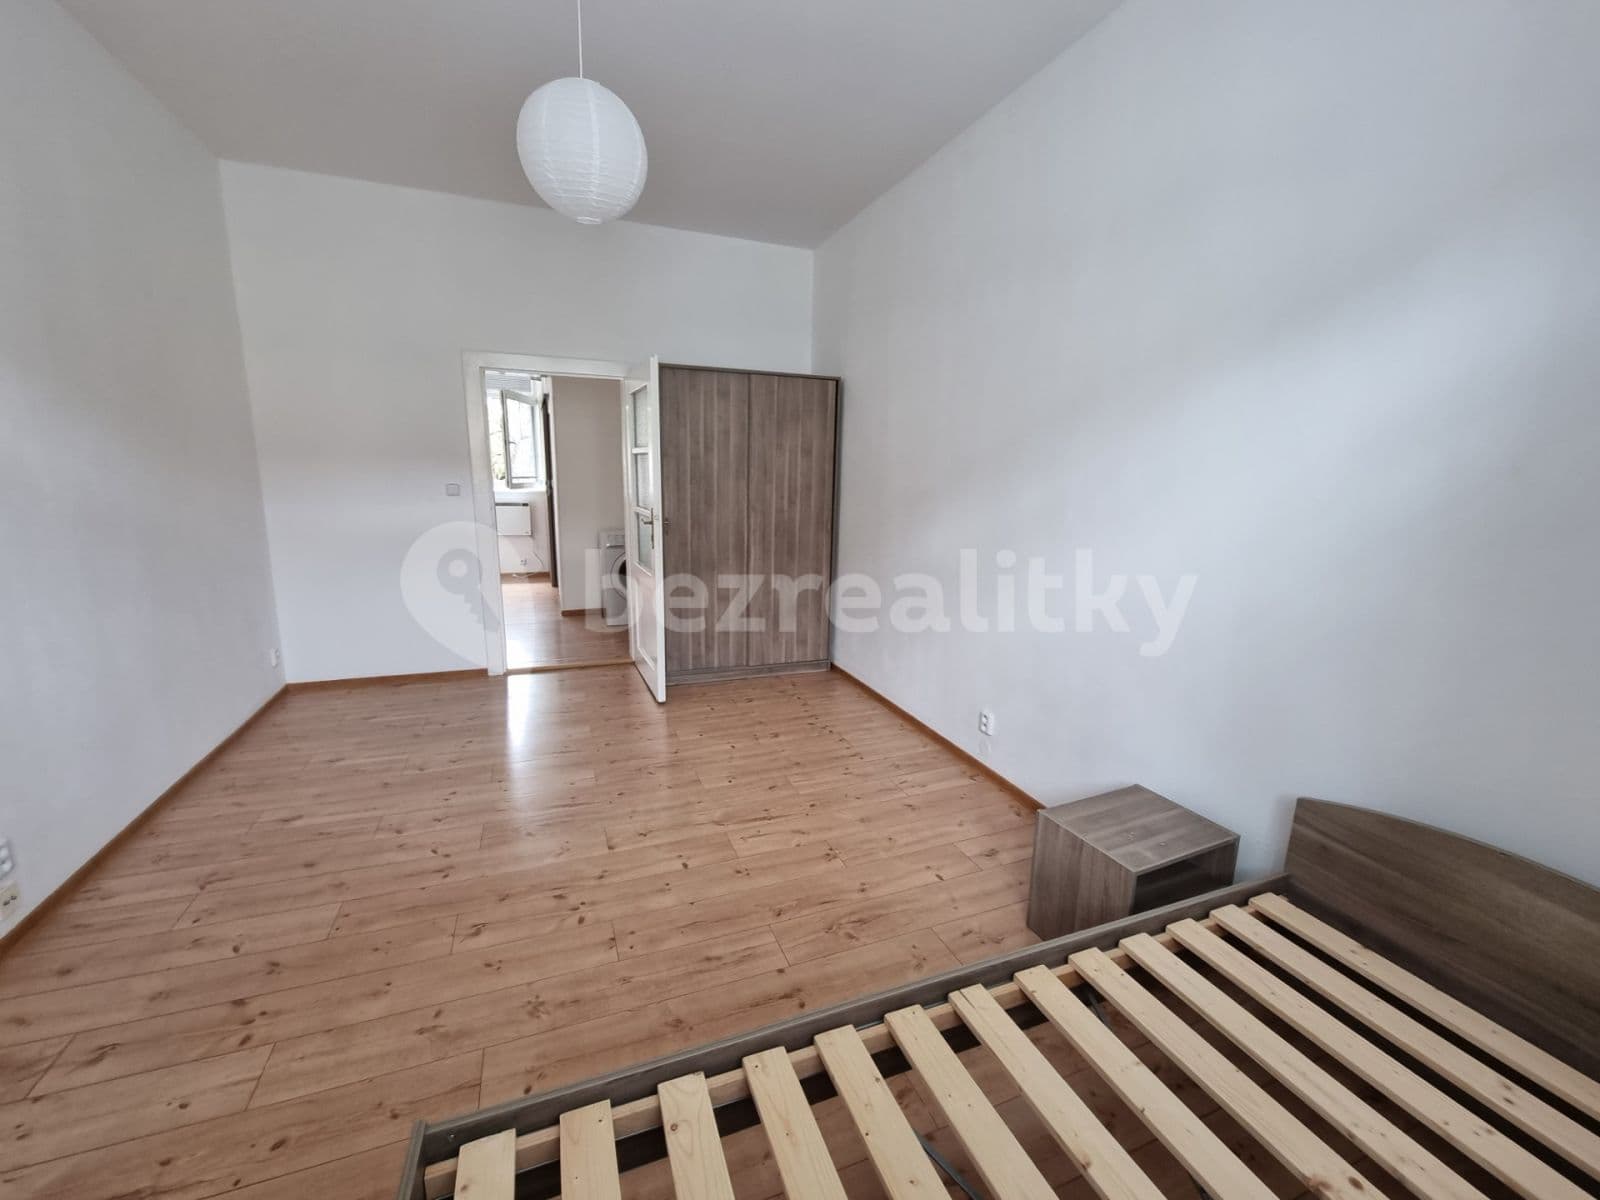 1 bedroom flat to rent, 35 m², Charbulova, Brno, Jihomoravský Region